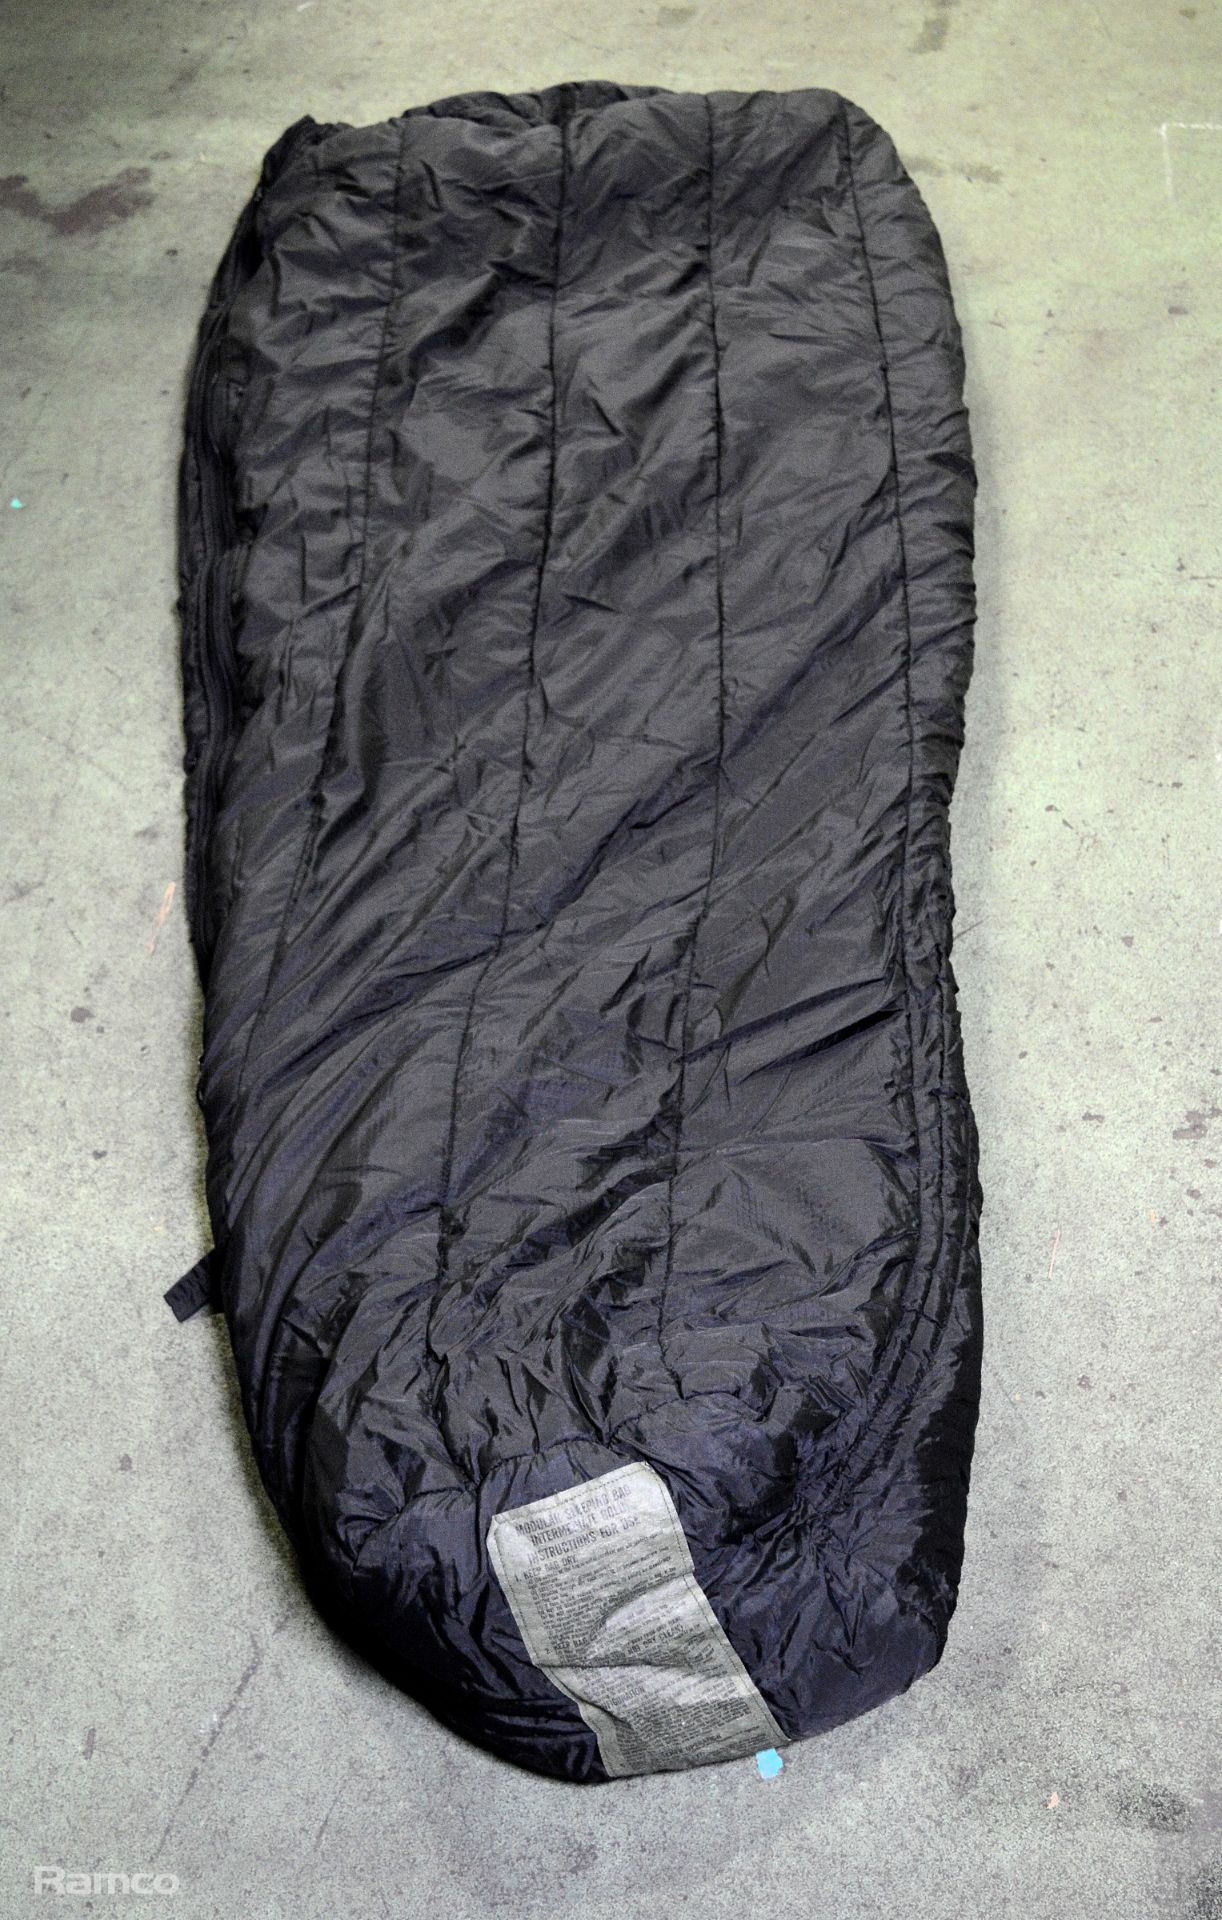 3x Tennier Industries Modular Sleeping Bags Intermediate Cold - Image 2 of 3